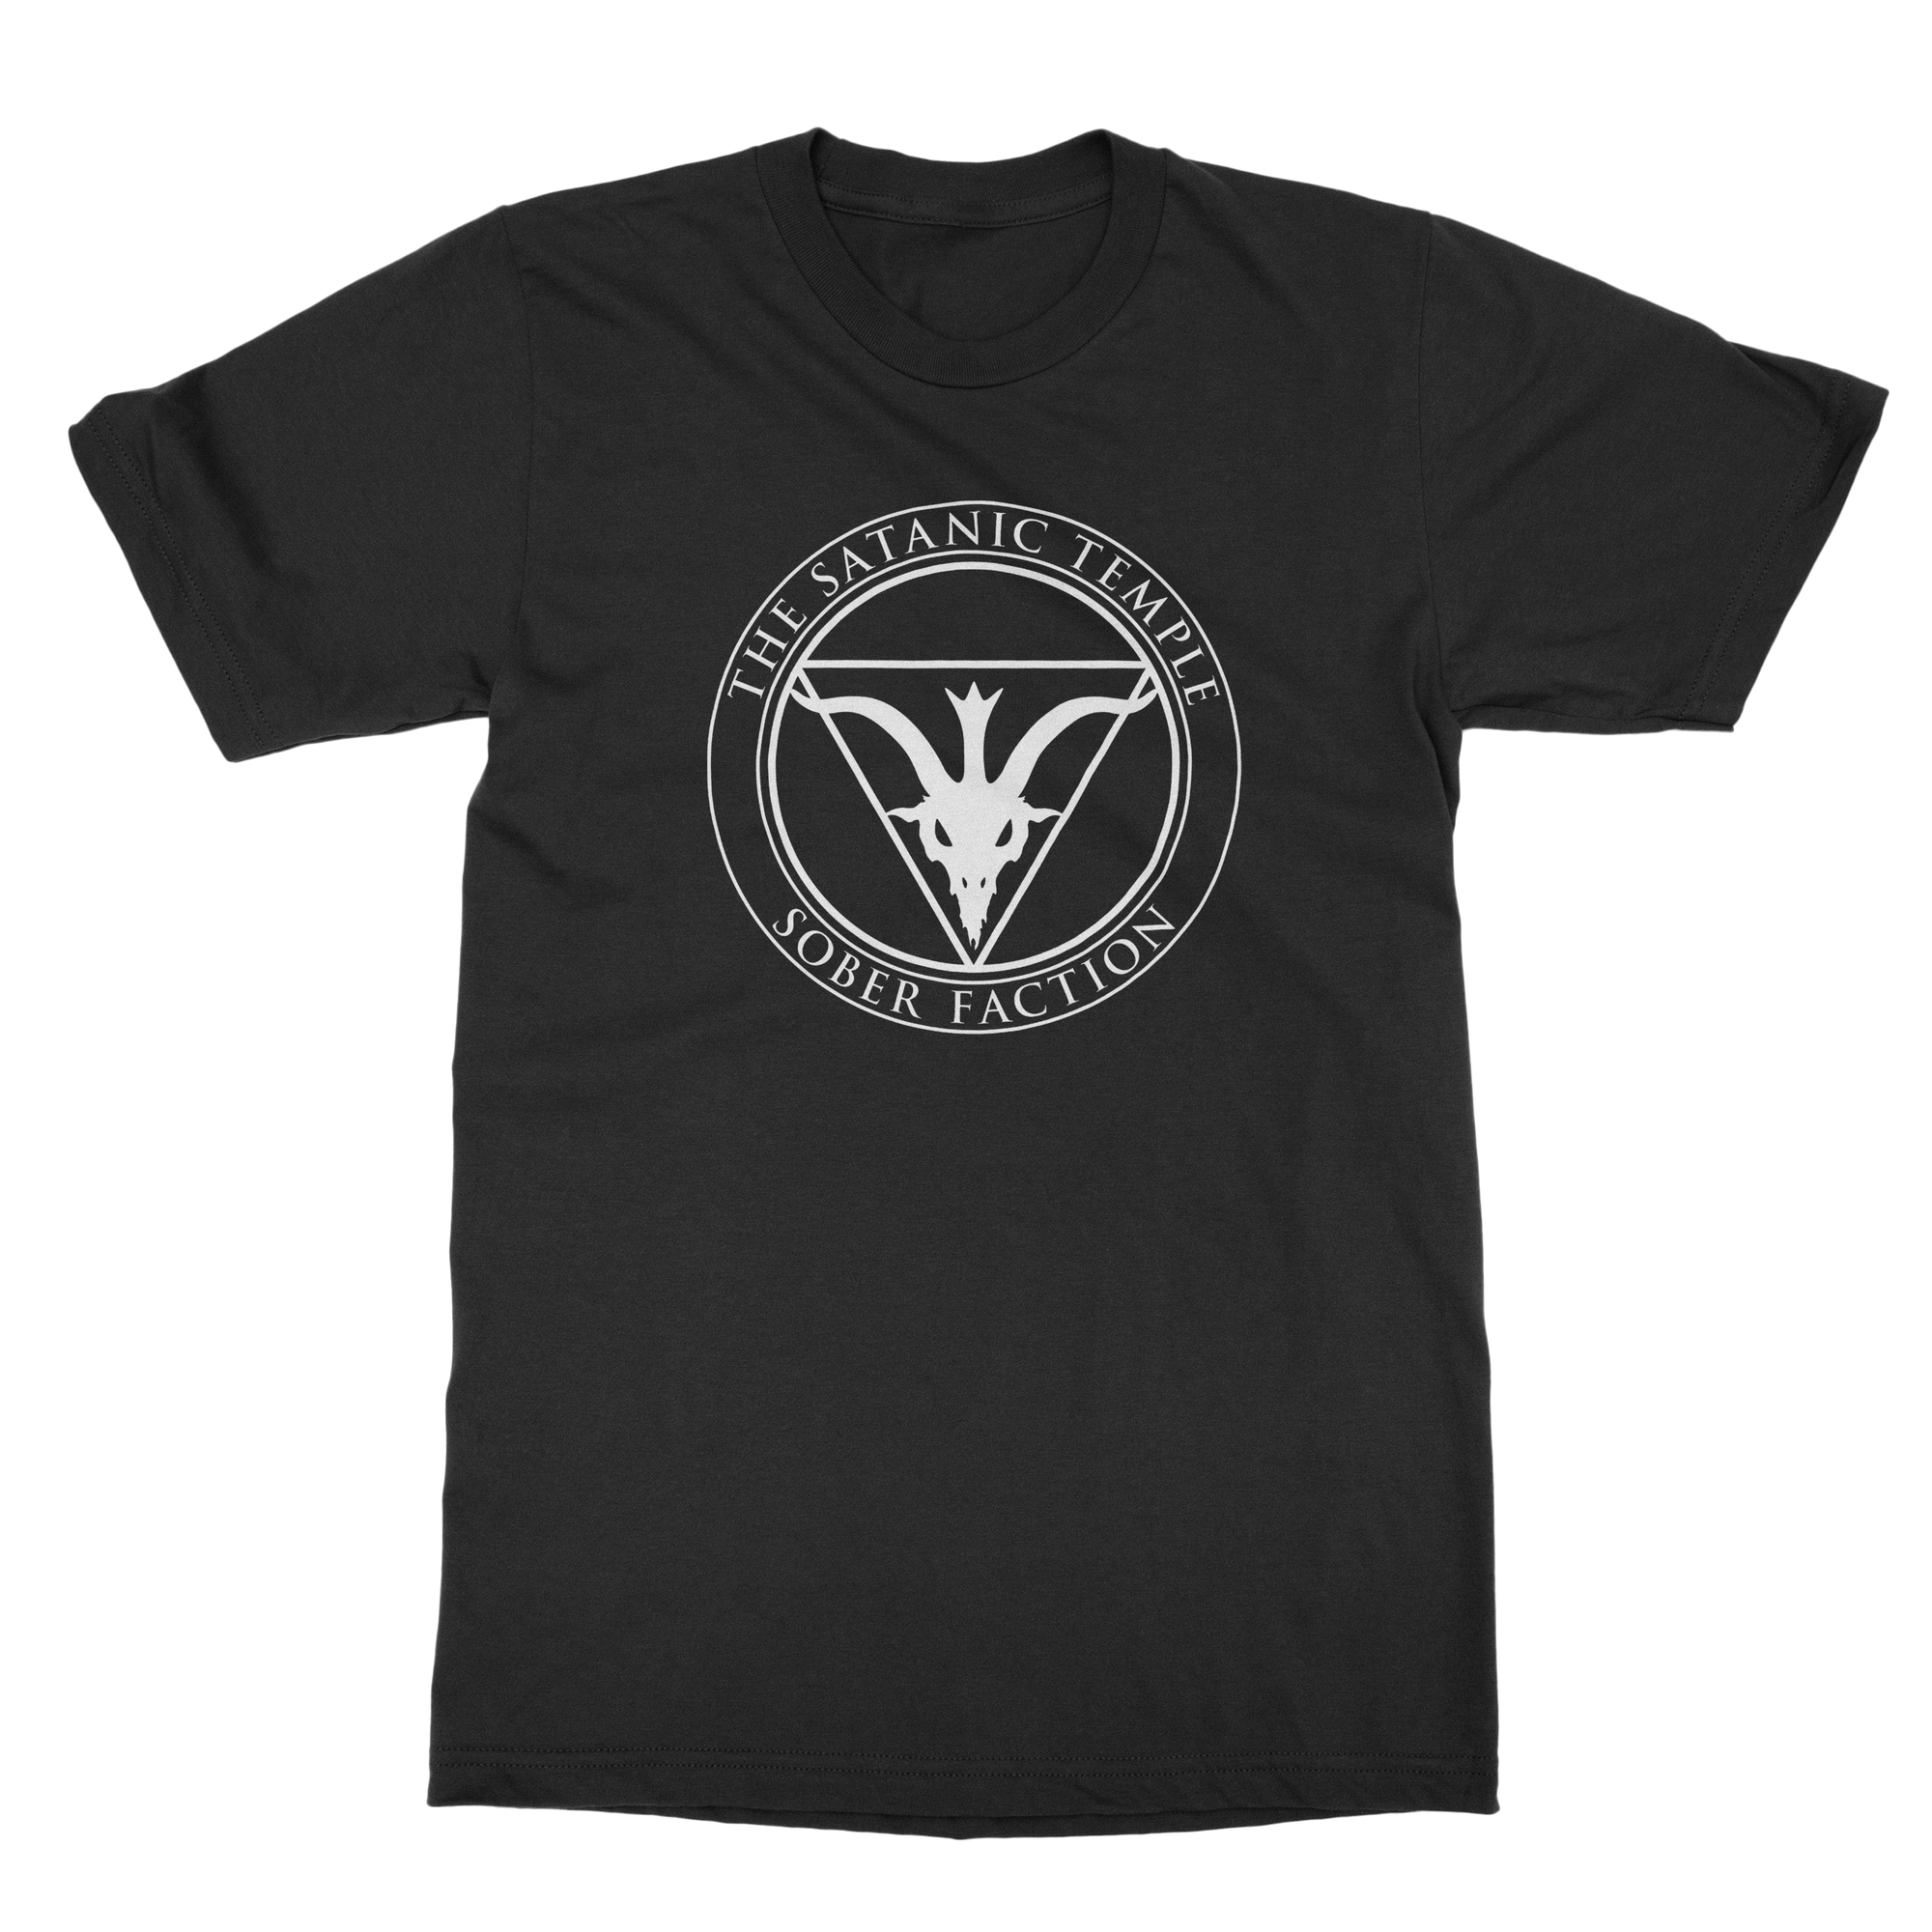 Sober Faction T-Shirt